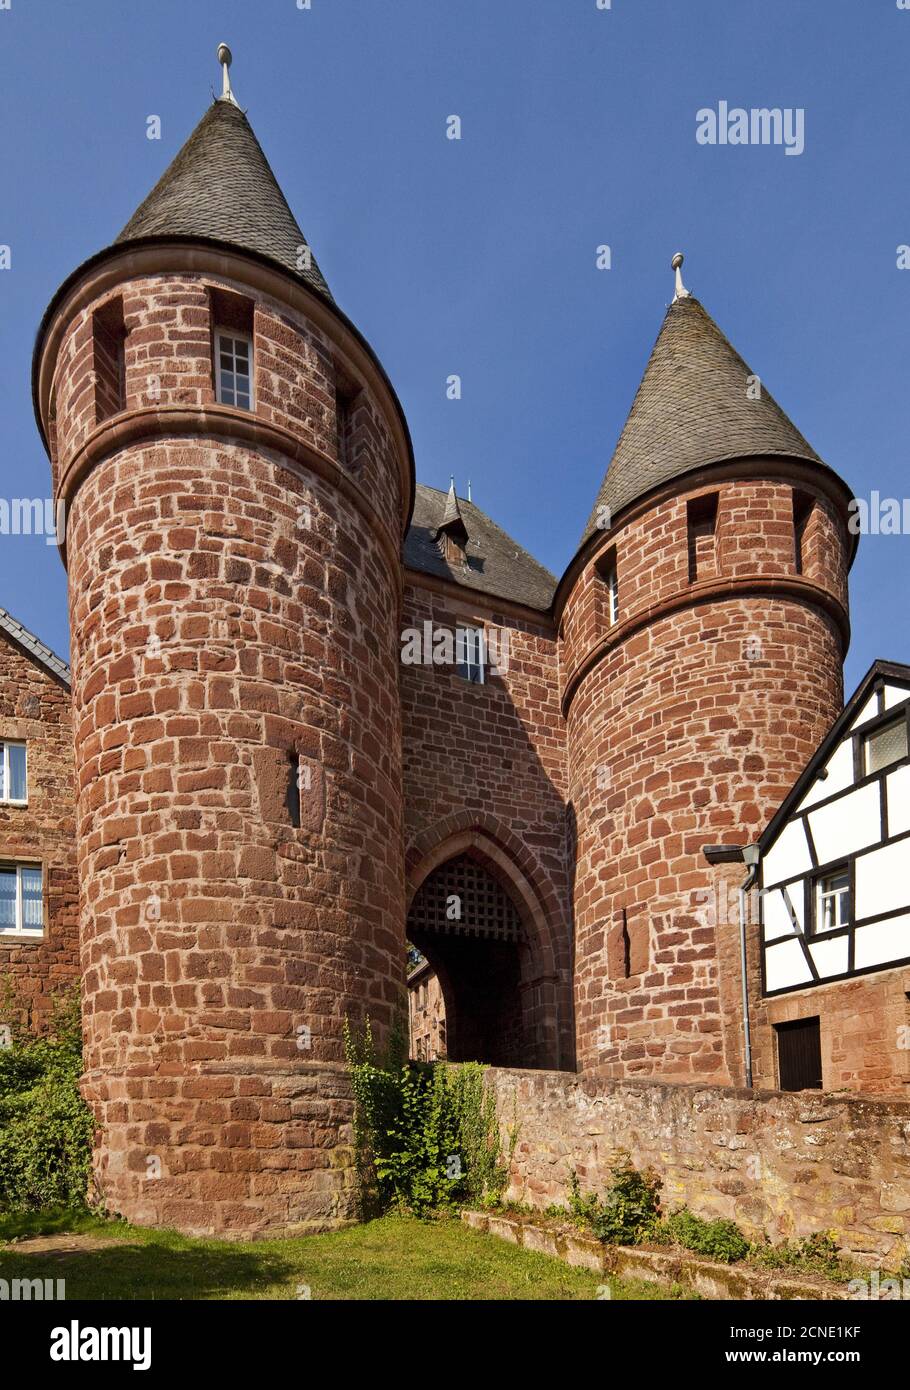 Dürener Tor von der Feldseite, Nideggen, Rureifel, Eifel, Nordrhein-Westfalen, Deutschland, Europa Stockfoto